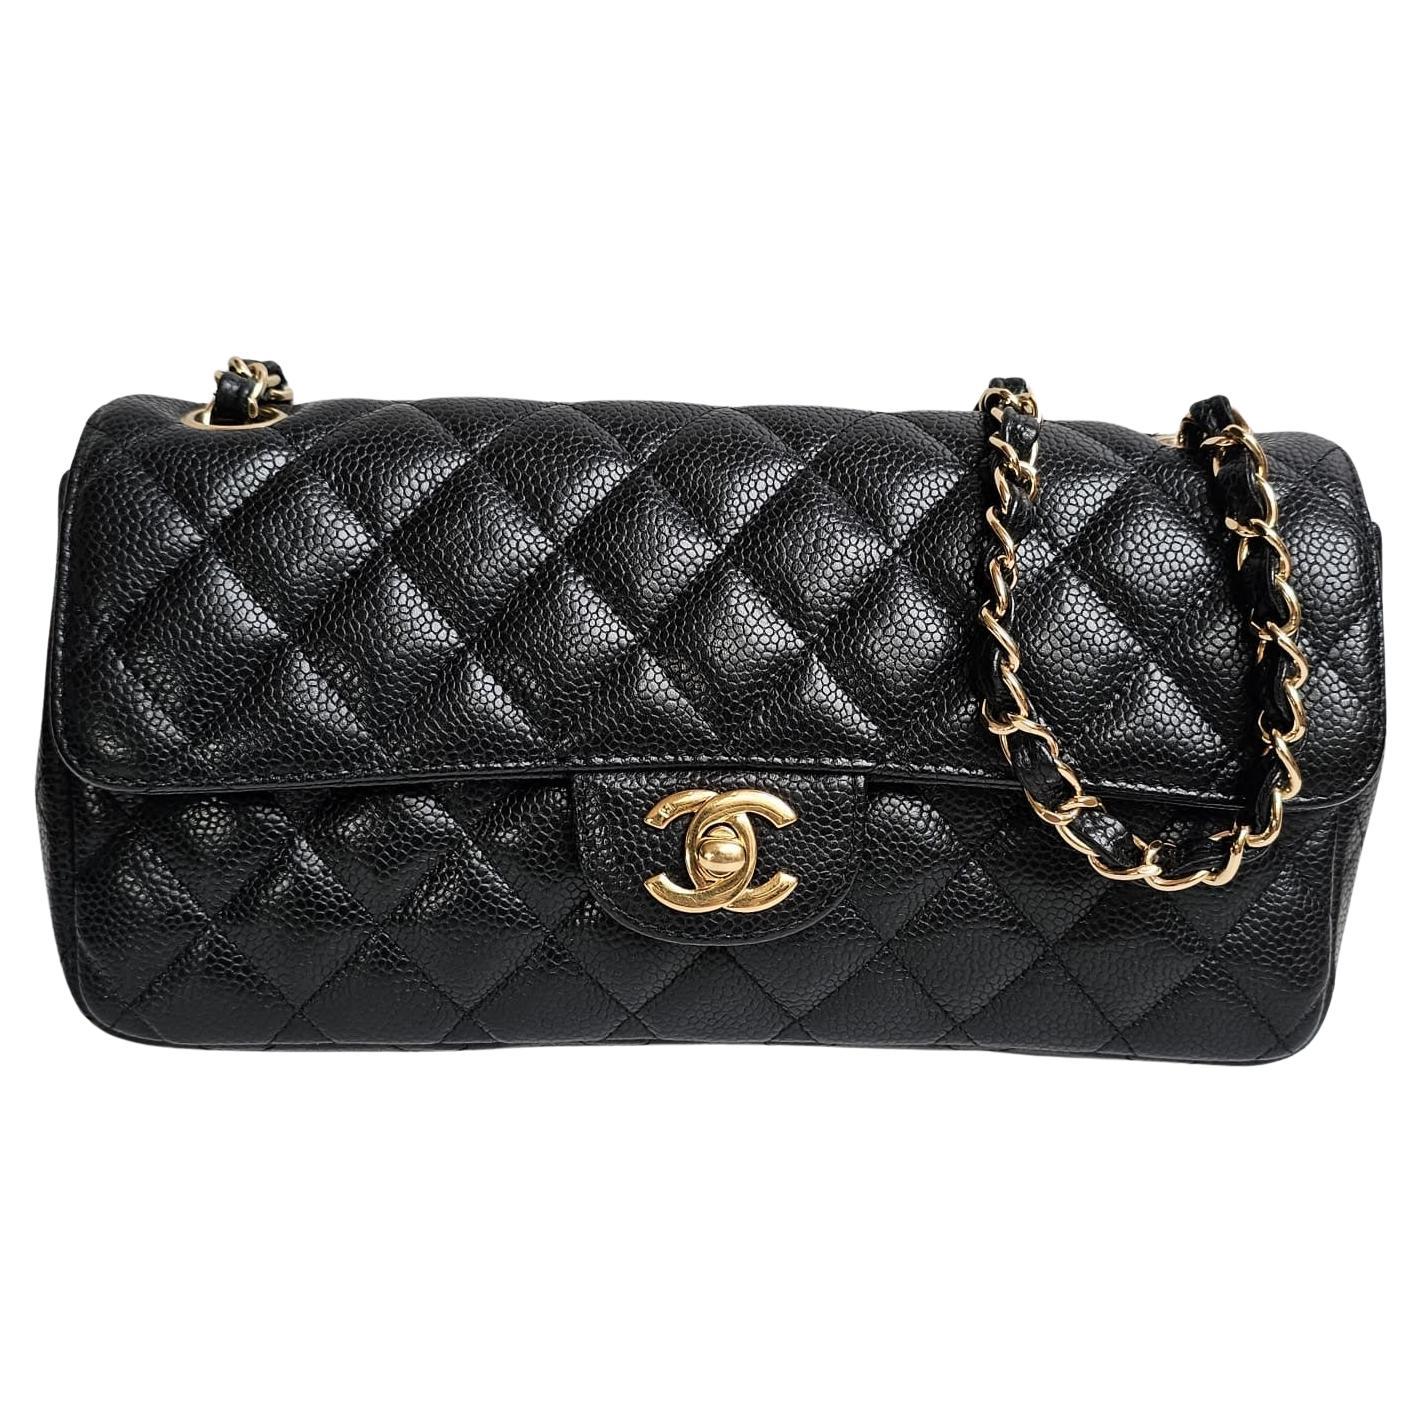 Chanel Black Caviar Quilted East West Flap Shoulder Bag For Sale